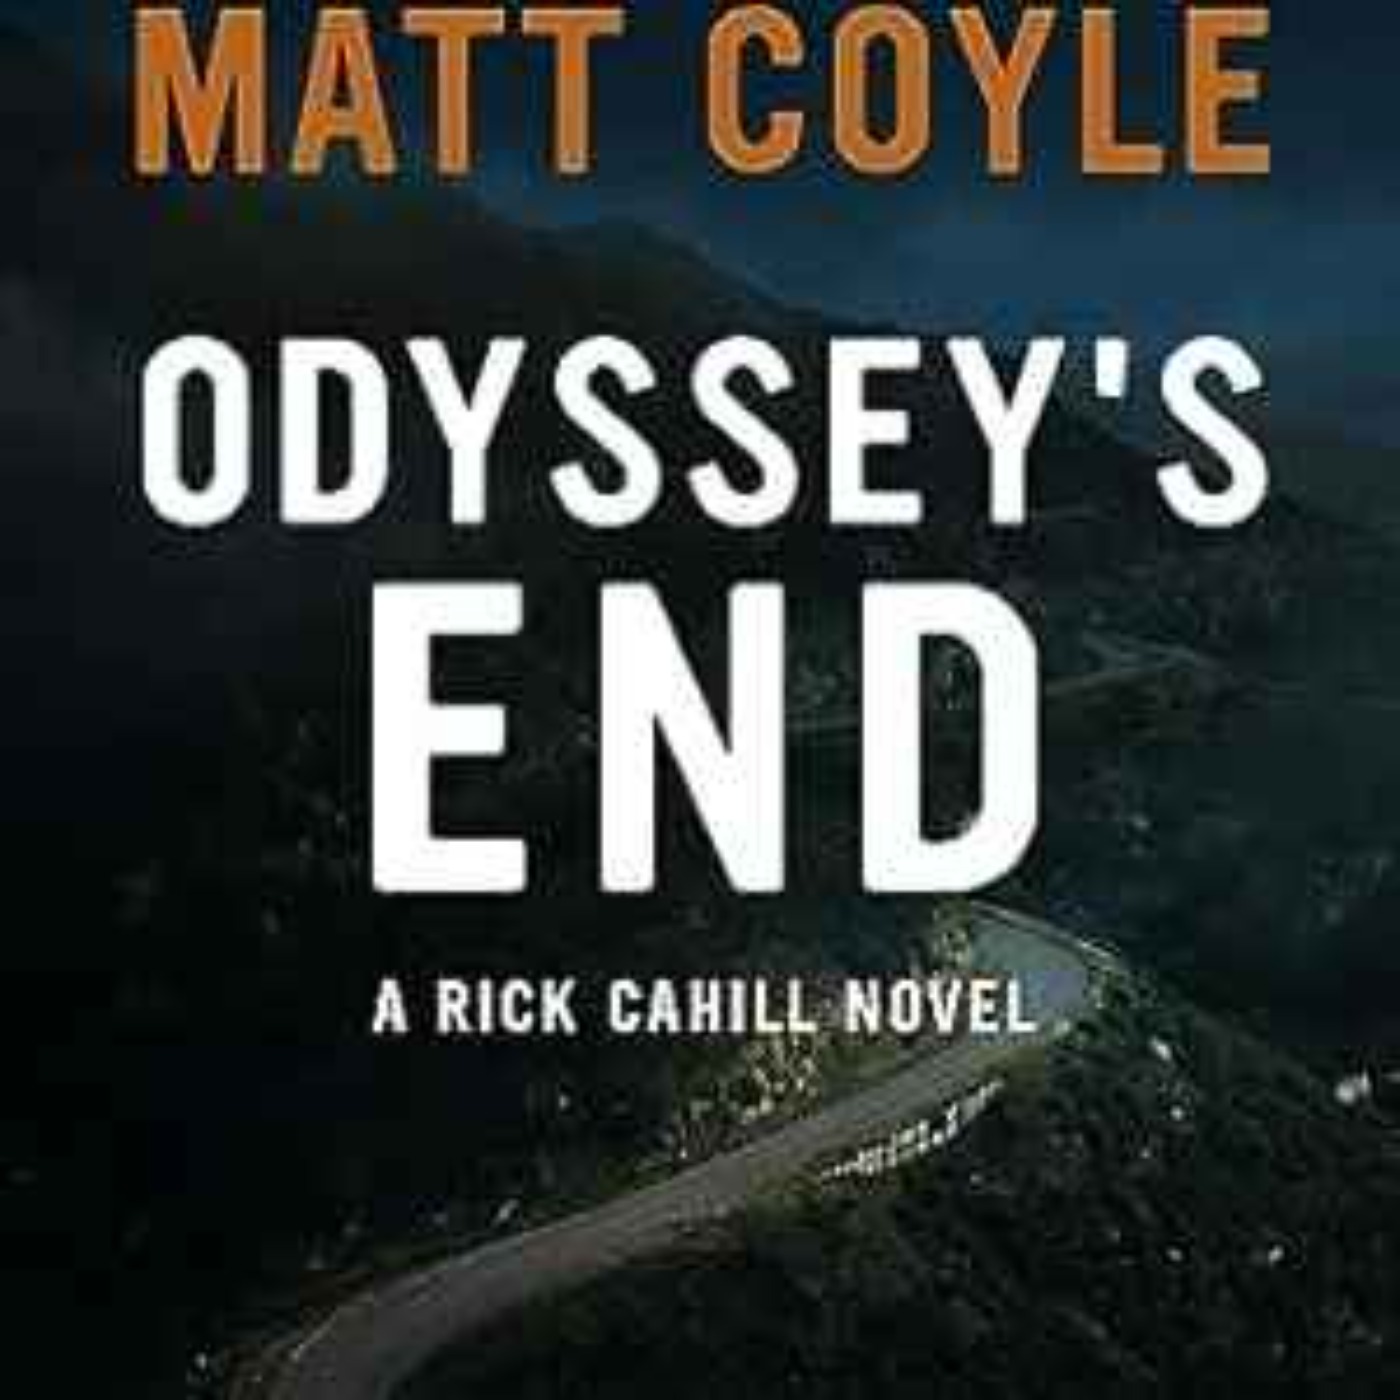 Matt Coyle - Odyssey's End (The Rick Cahill Series Book 10)